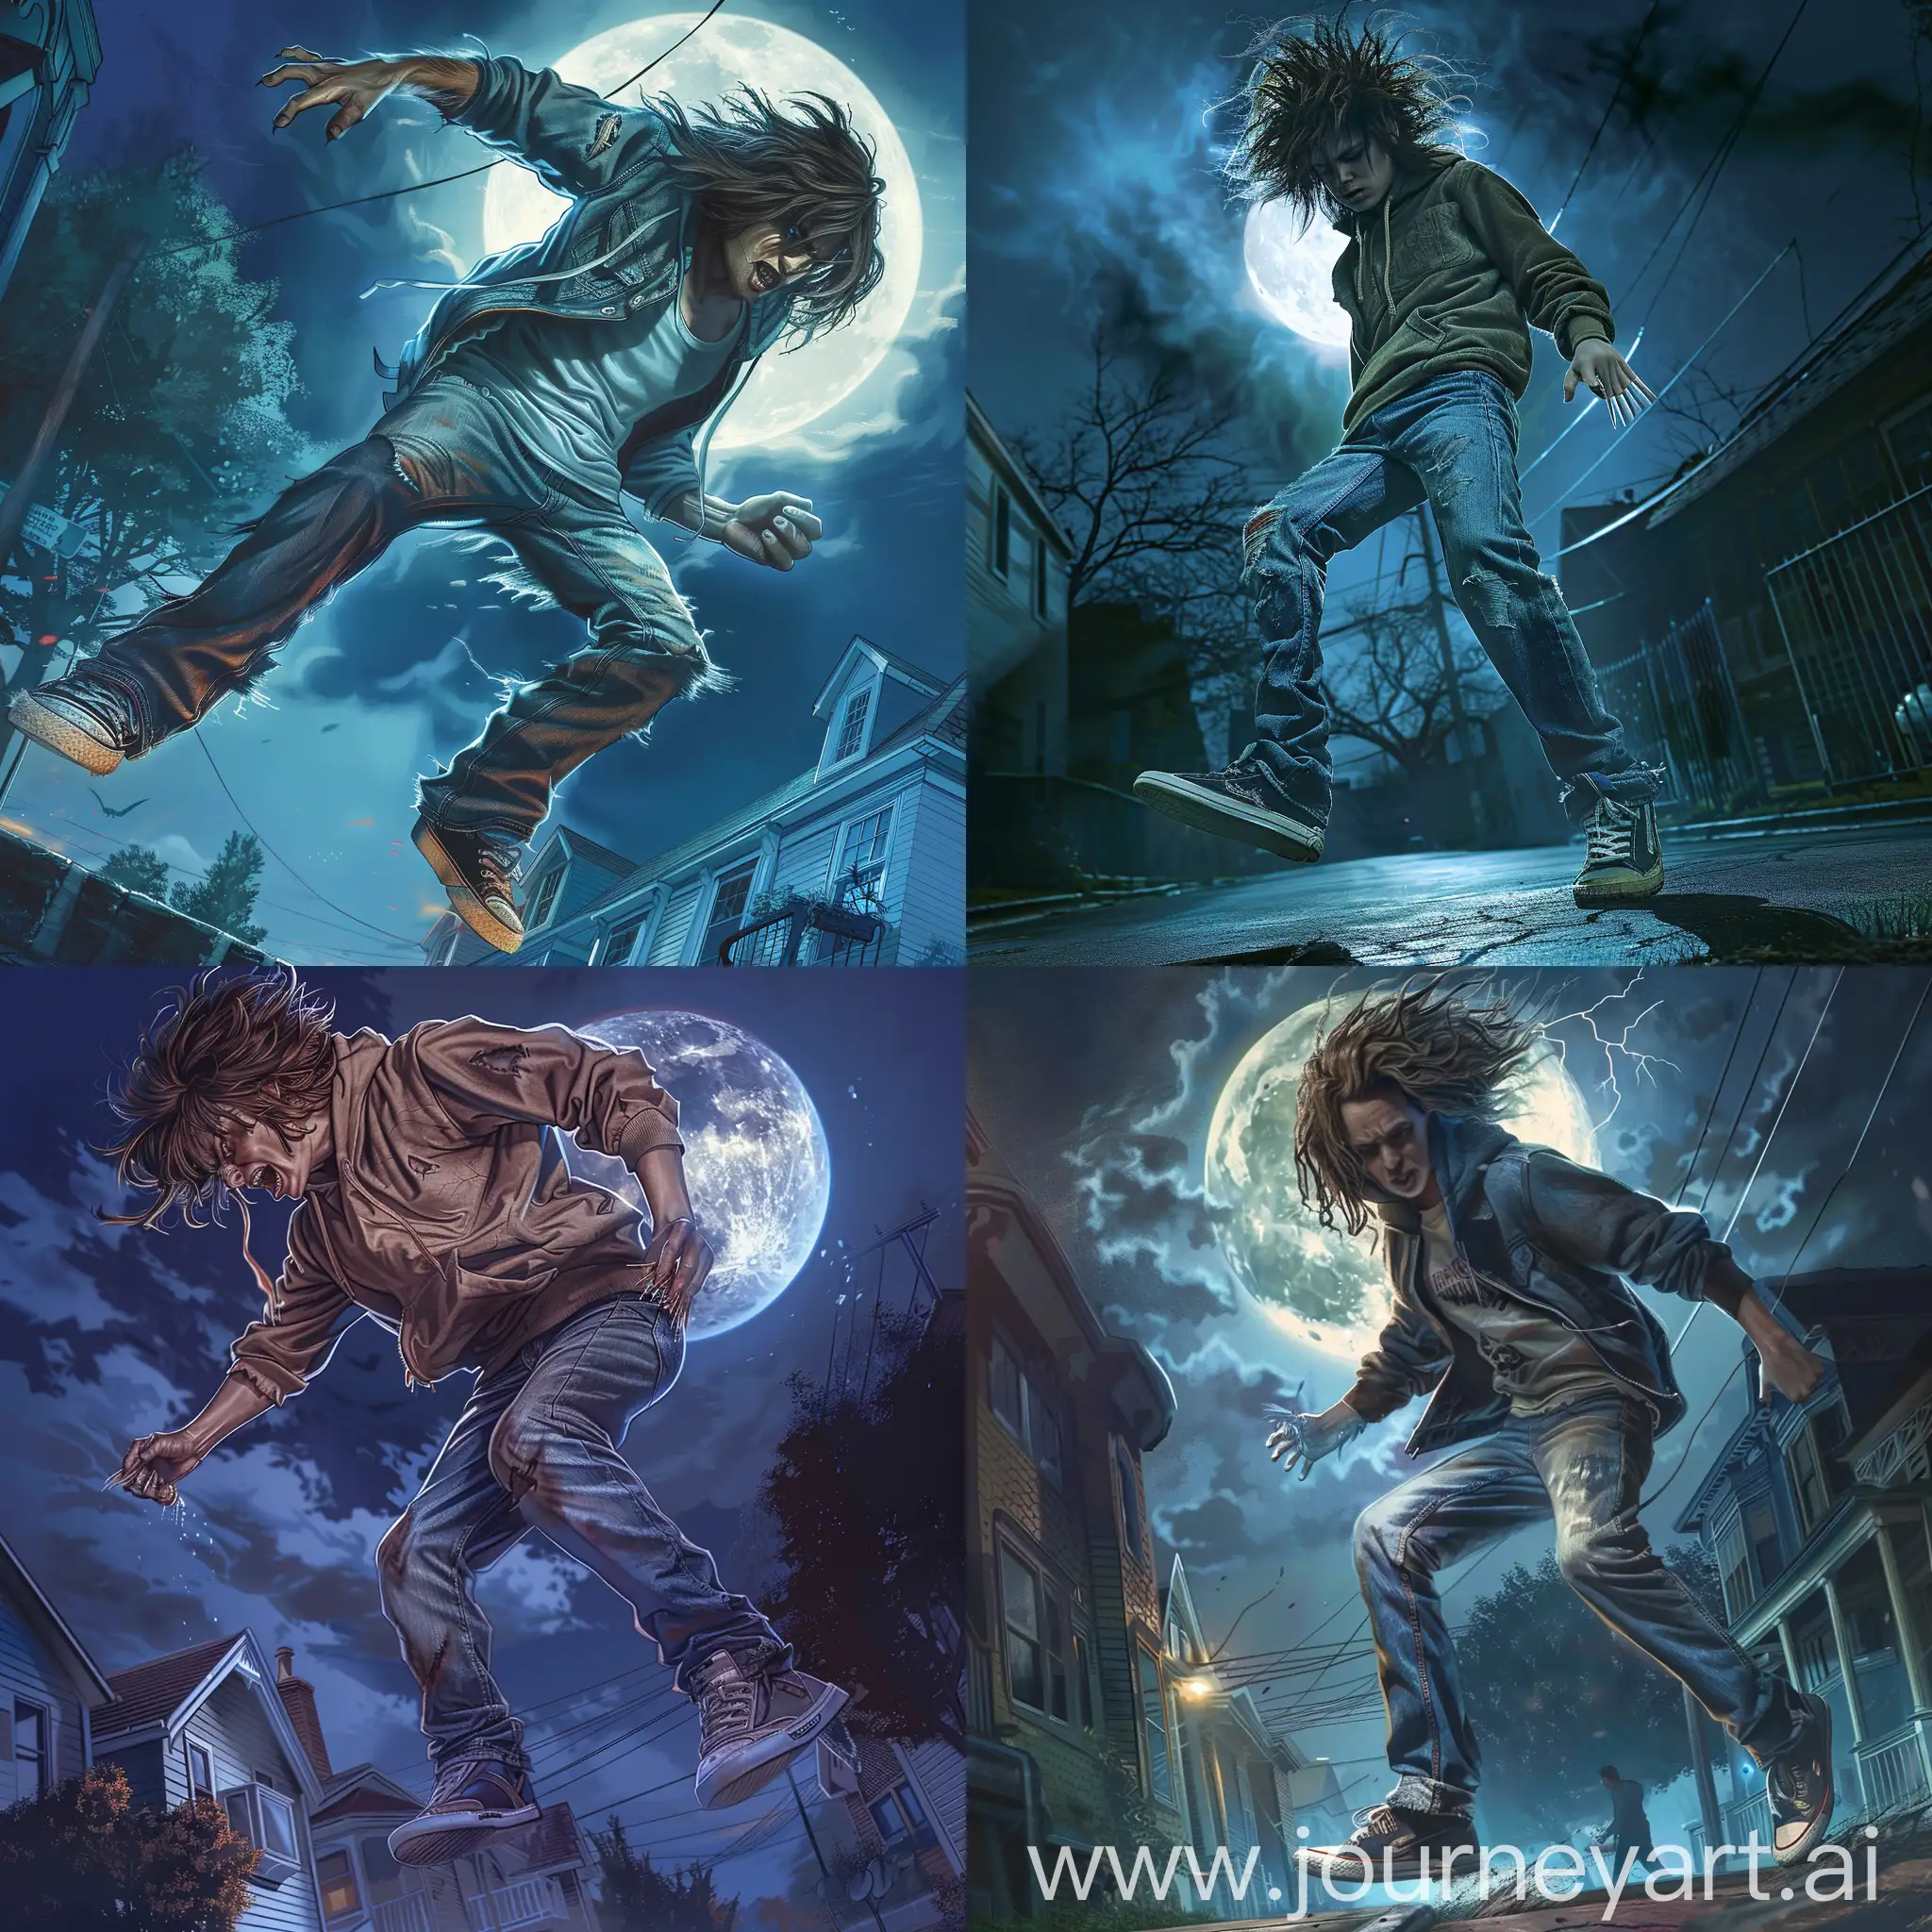 Moonlit-Werewolf-Encounter-Terrifying-Night-for-Ethan-Miller